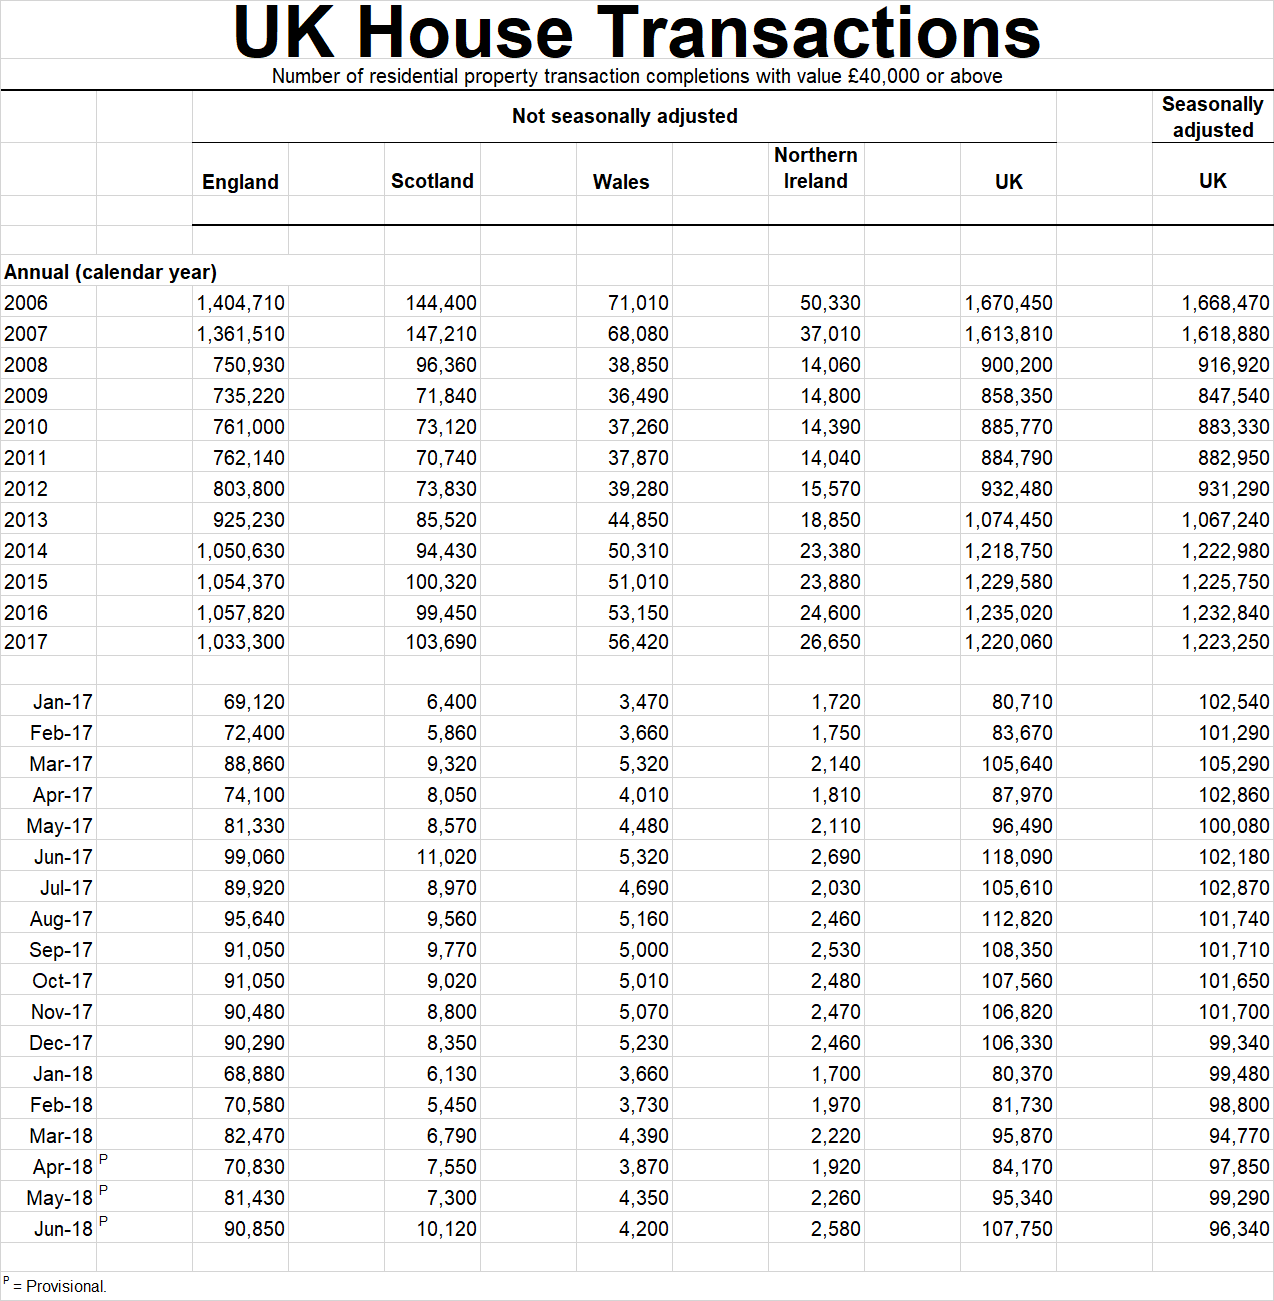 UK House Transactions until June 2018